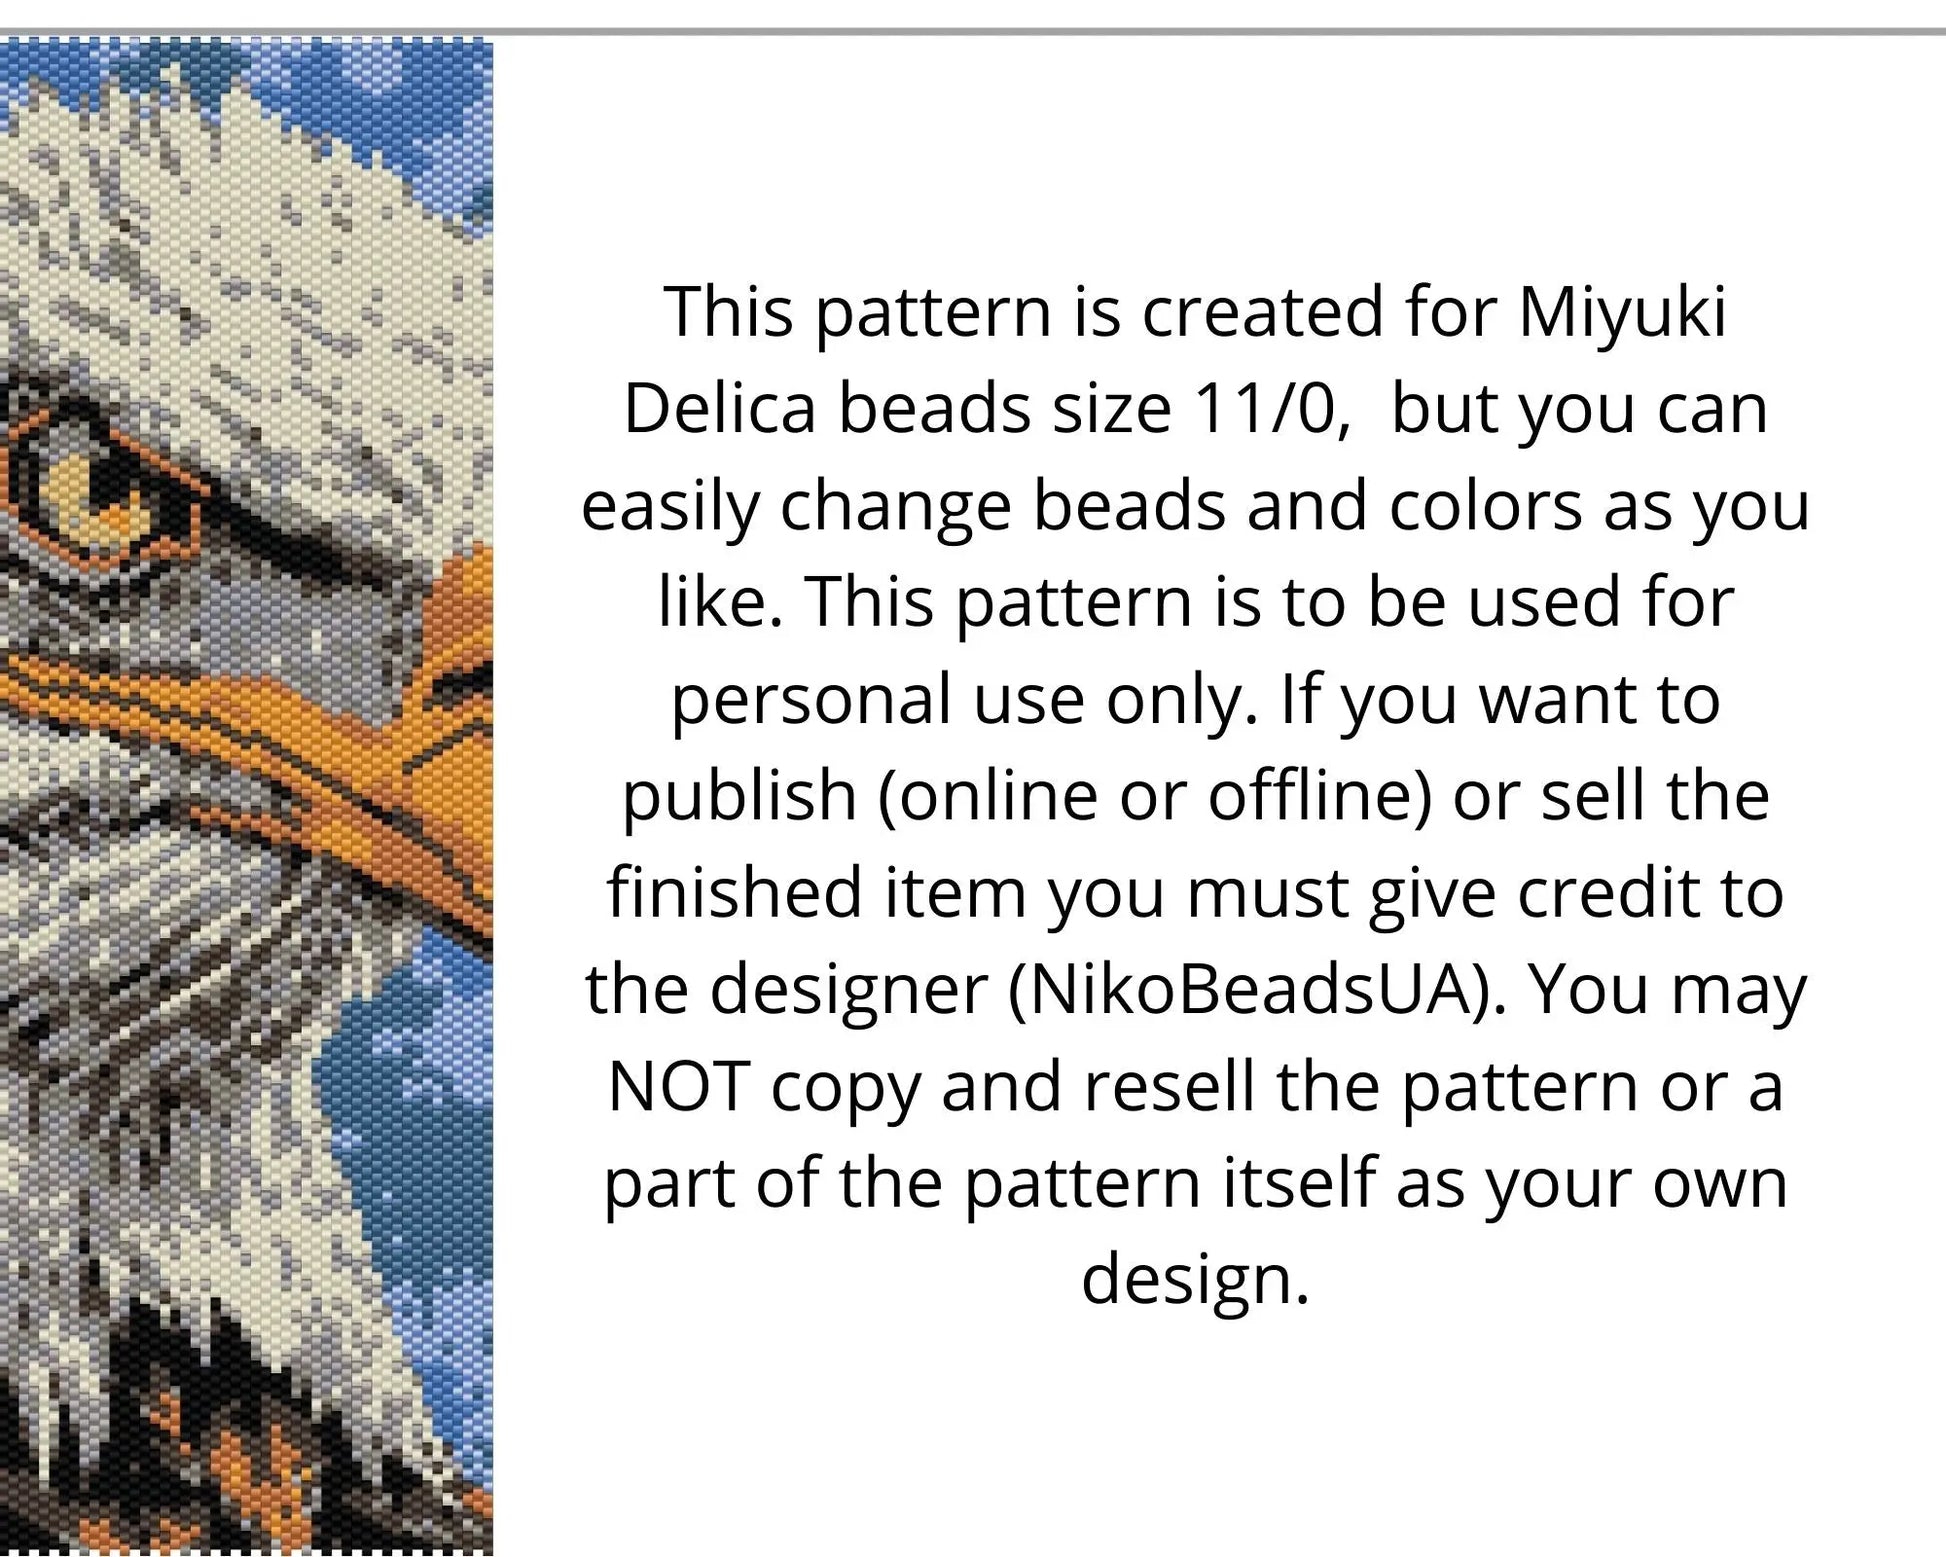 Eagle even peyote pattern for beaded tapestry NikoBeadsUA